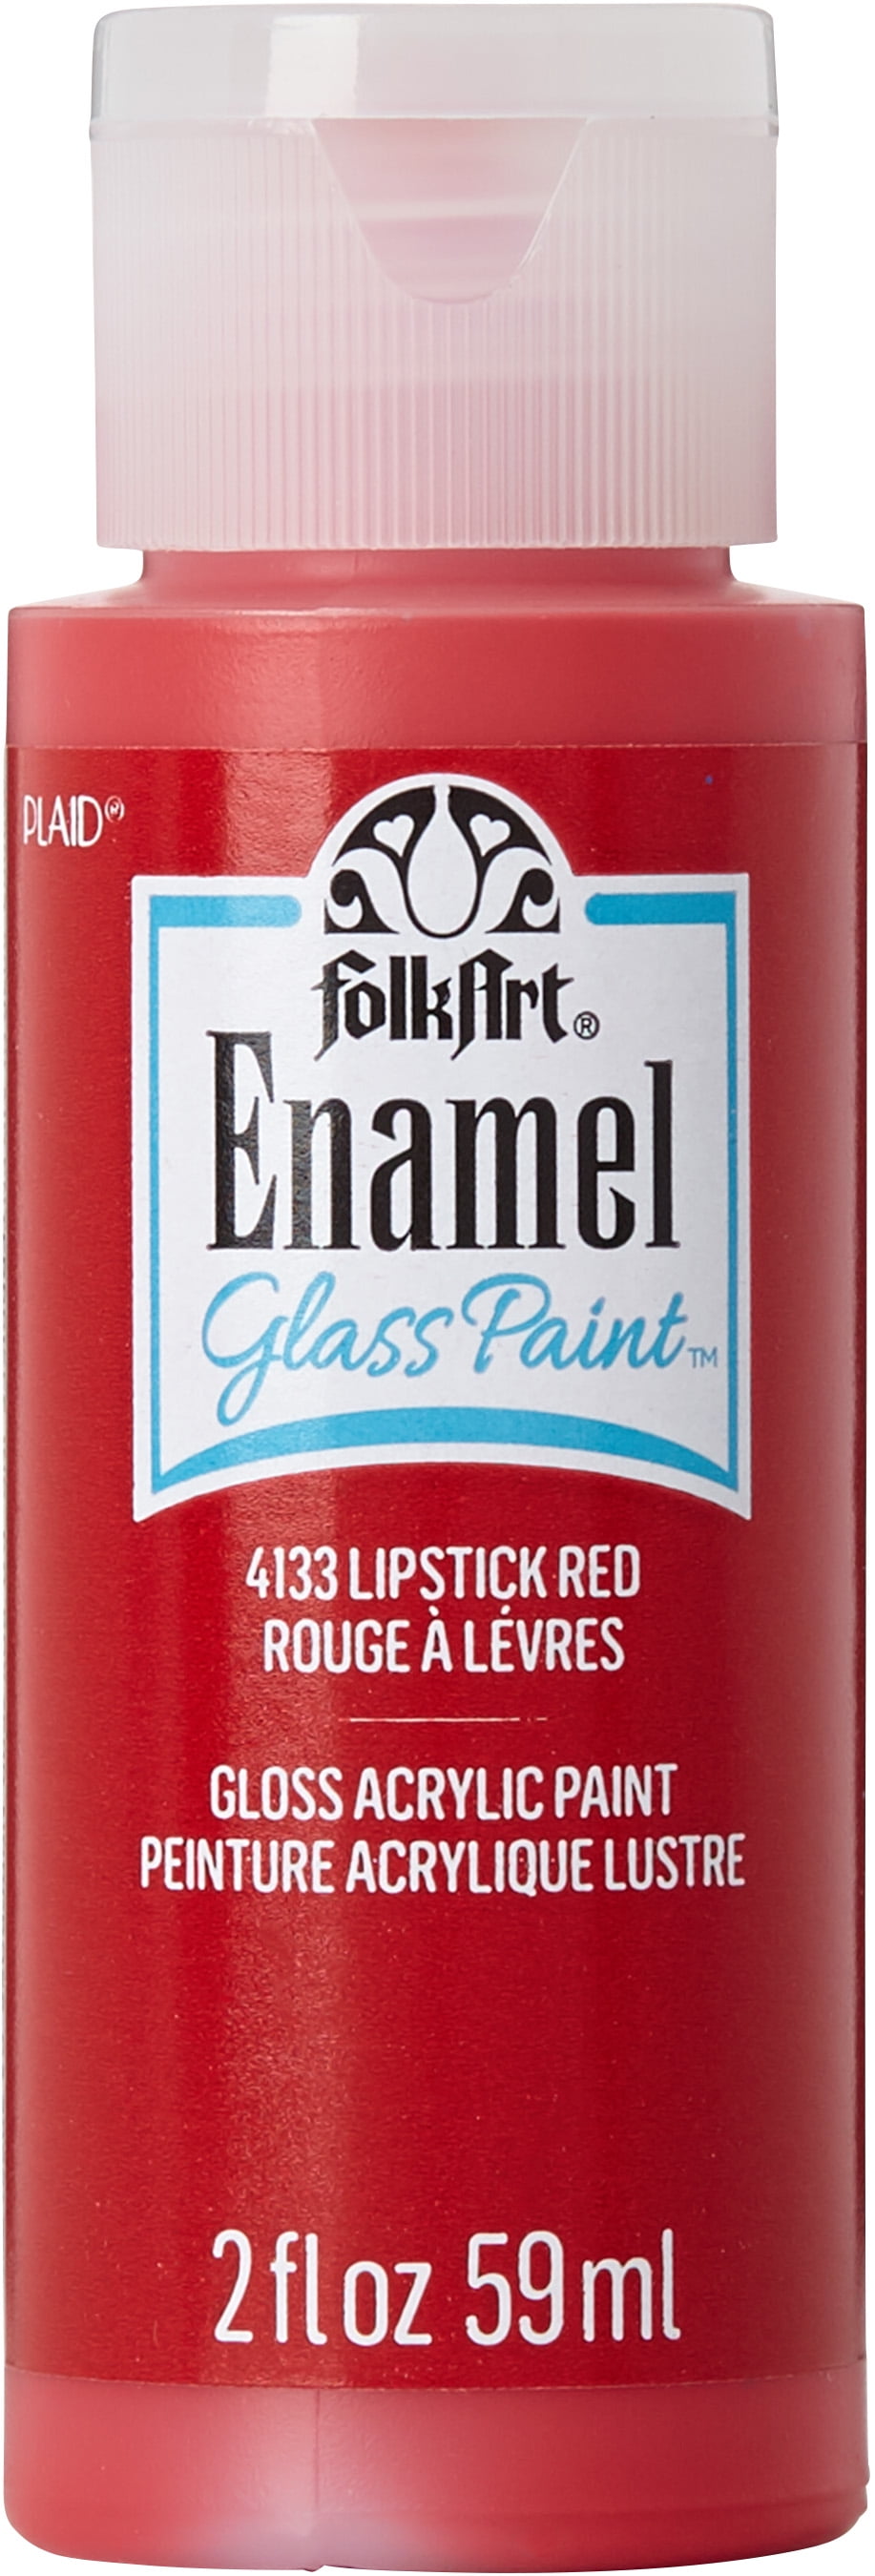 FolkArt Enamel Acrylic Craft Paint, Gloss Finish, Lipstick Red, 2 fl oz